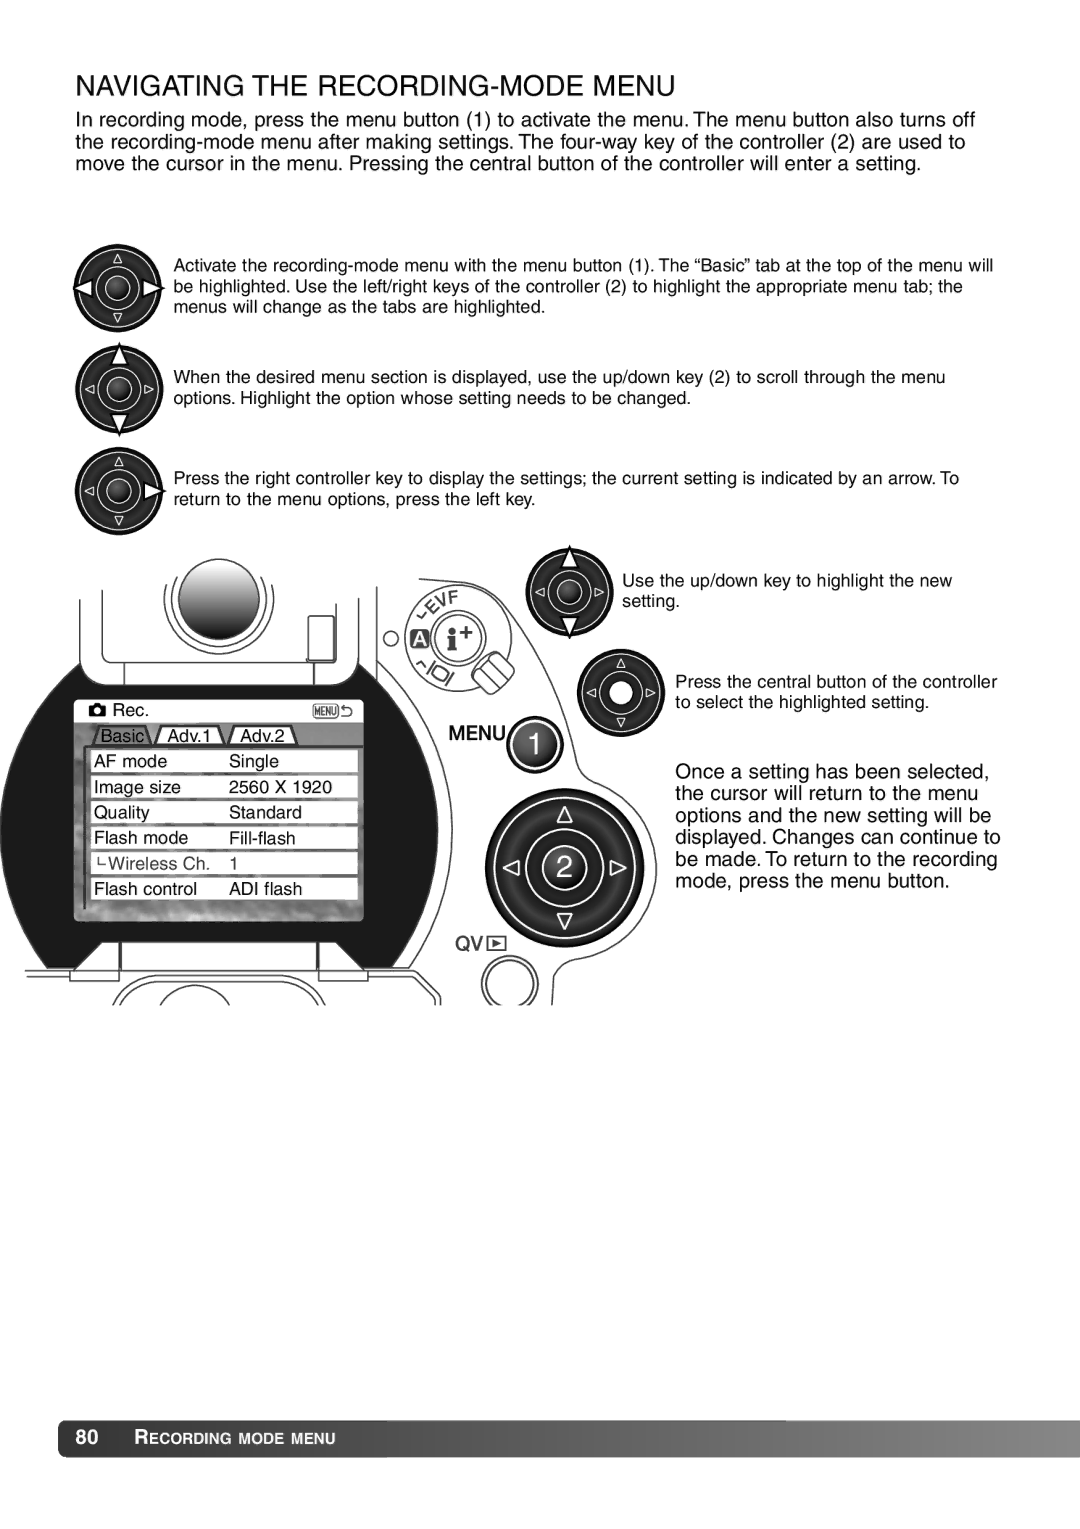 Konica Minolta 7Hi instruction manual Navigating the RECORDING-MODE Menu, Options and the new setting will be 